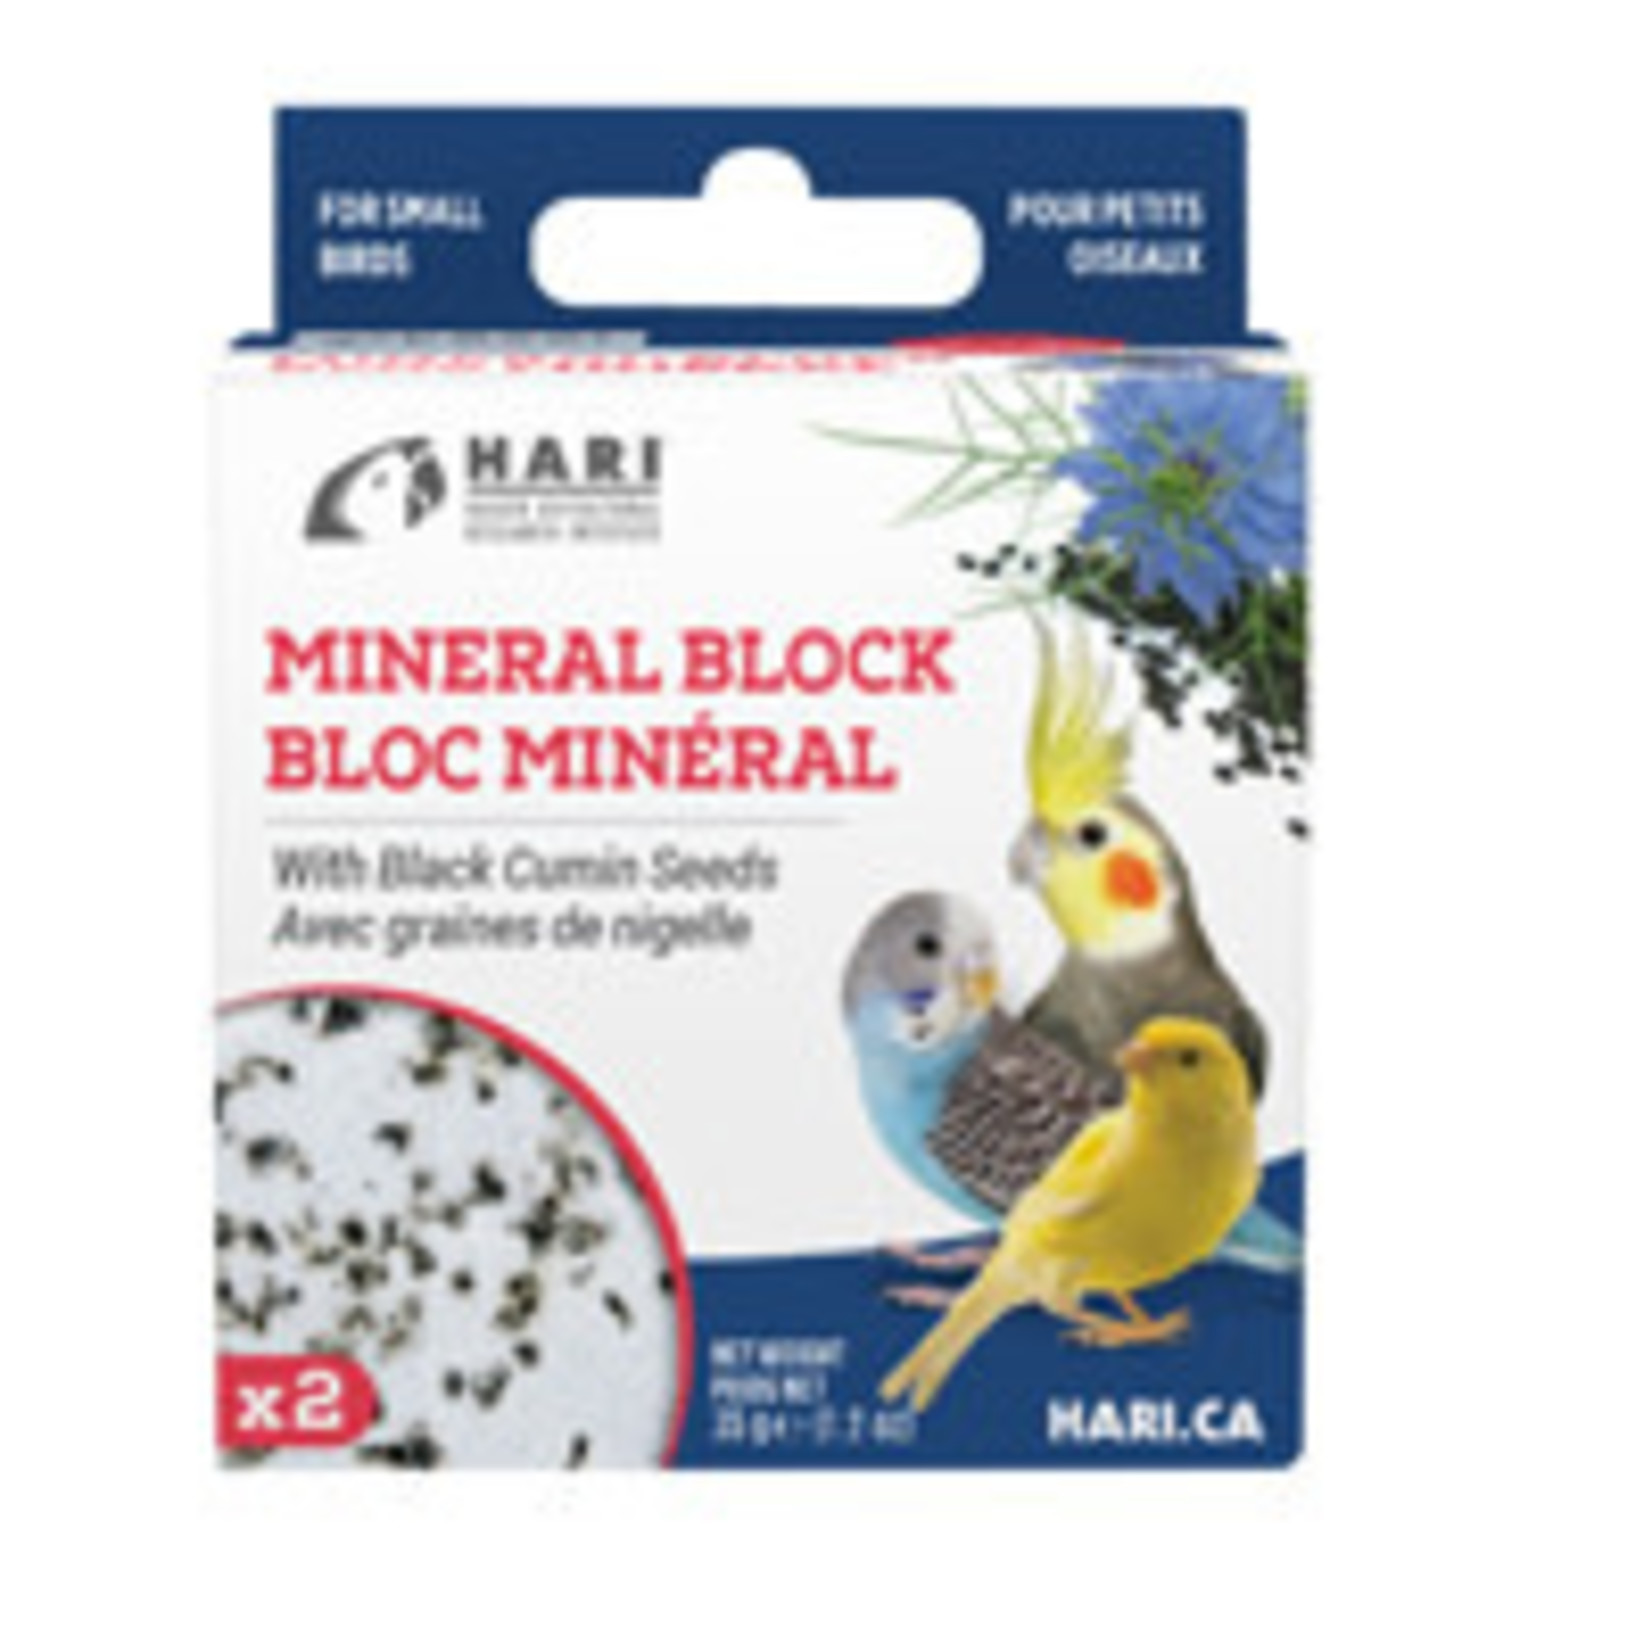 HARI Mineral Block for Small Birds - Black Cumin Seeds - 35 g - 2 pack